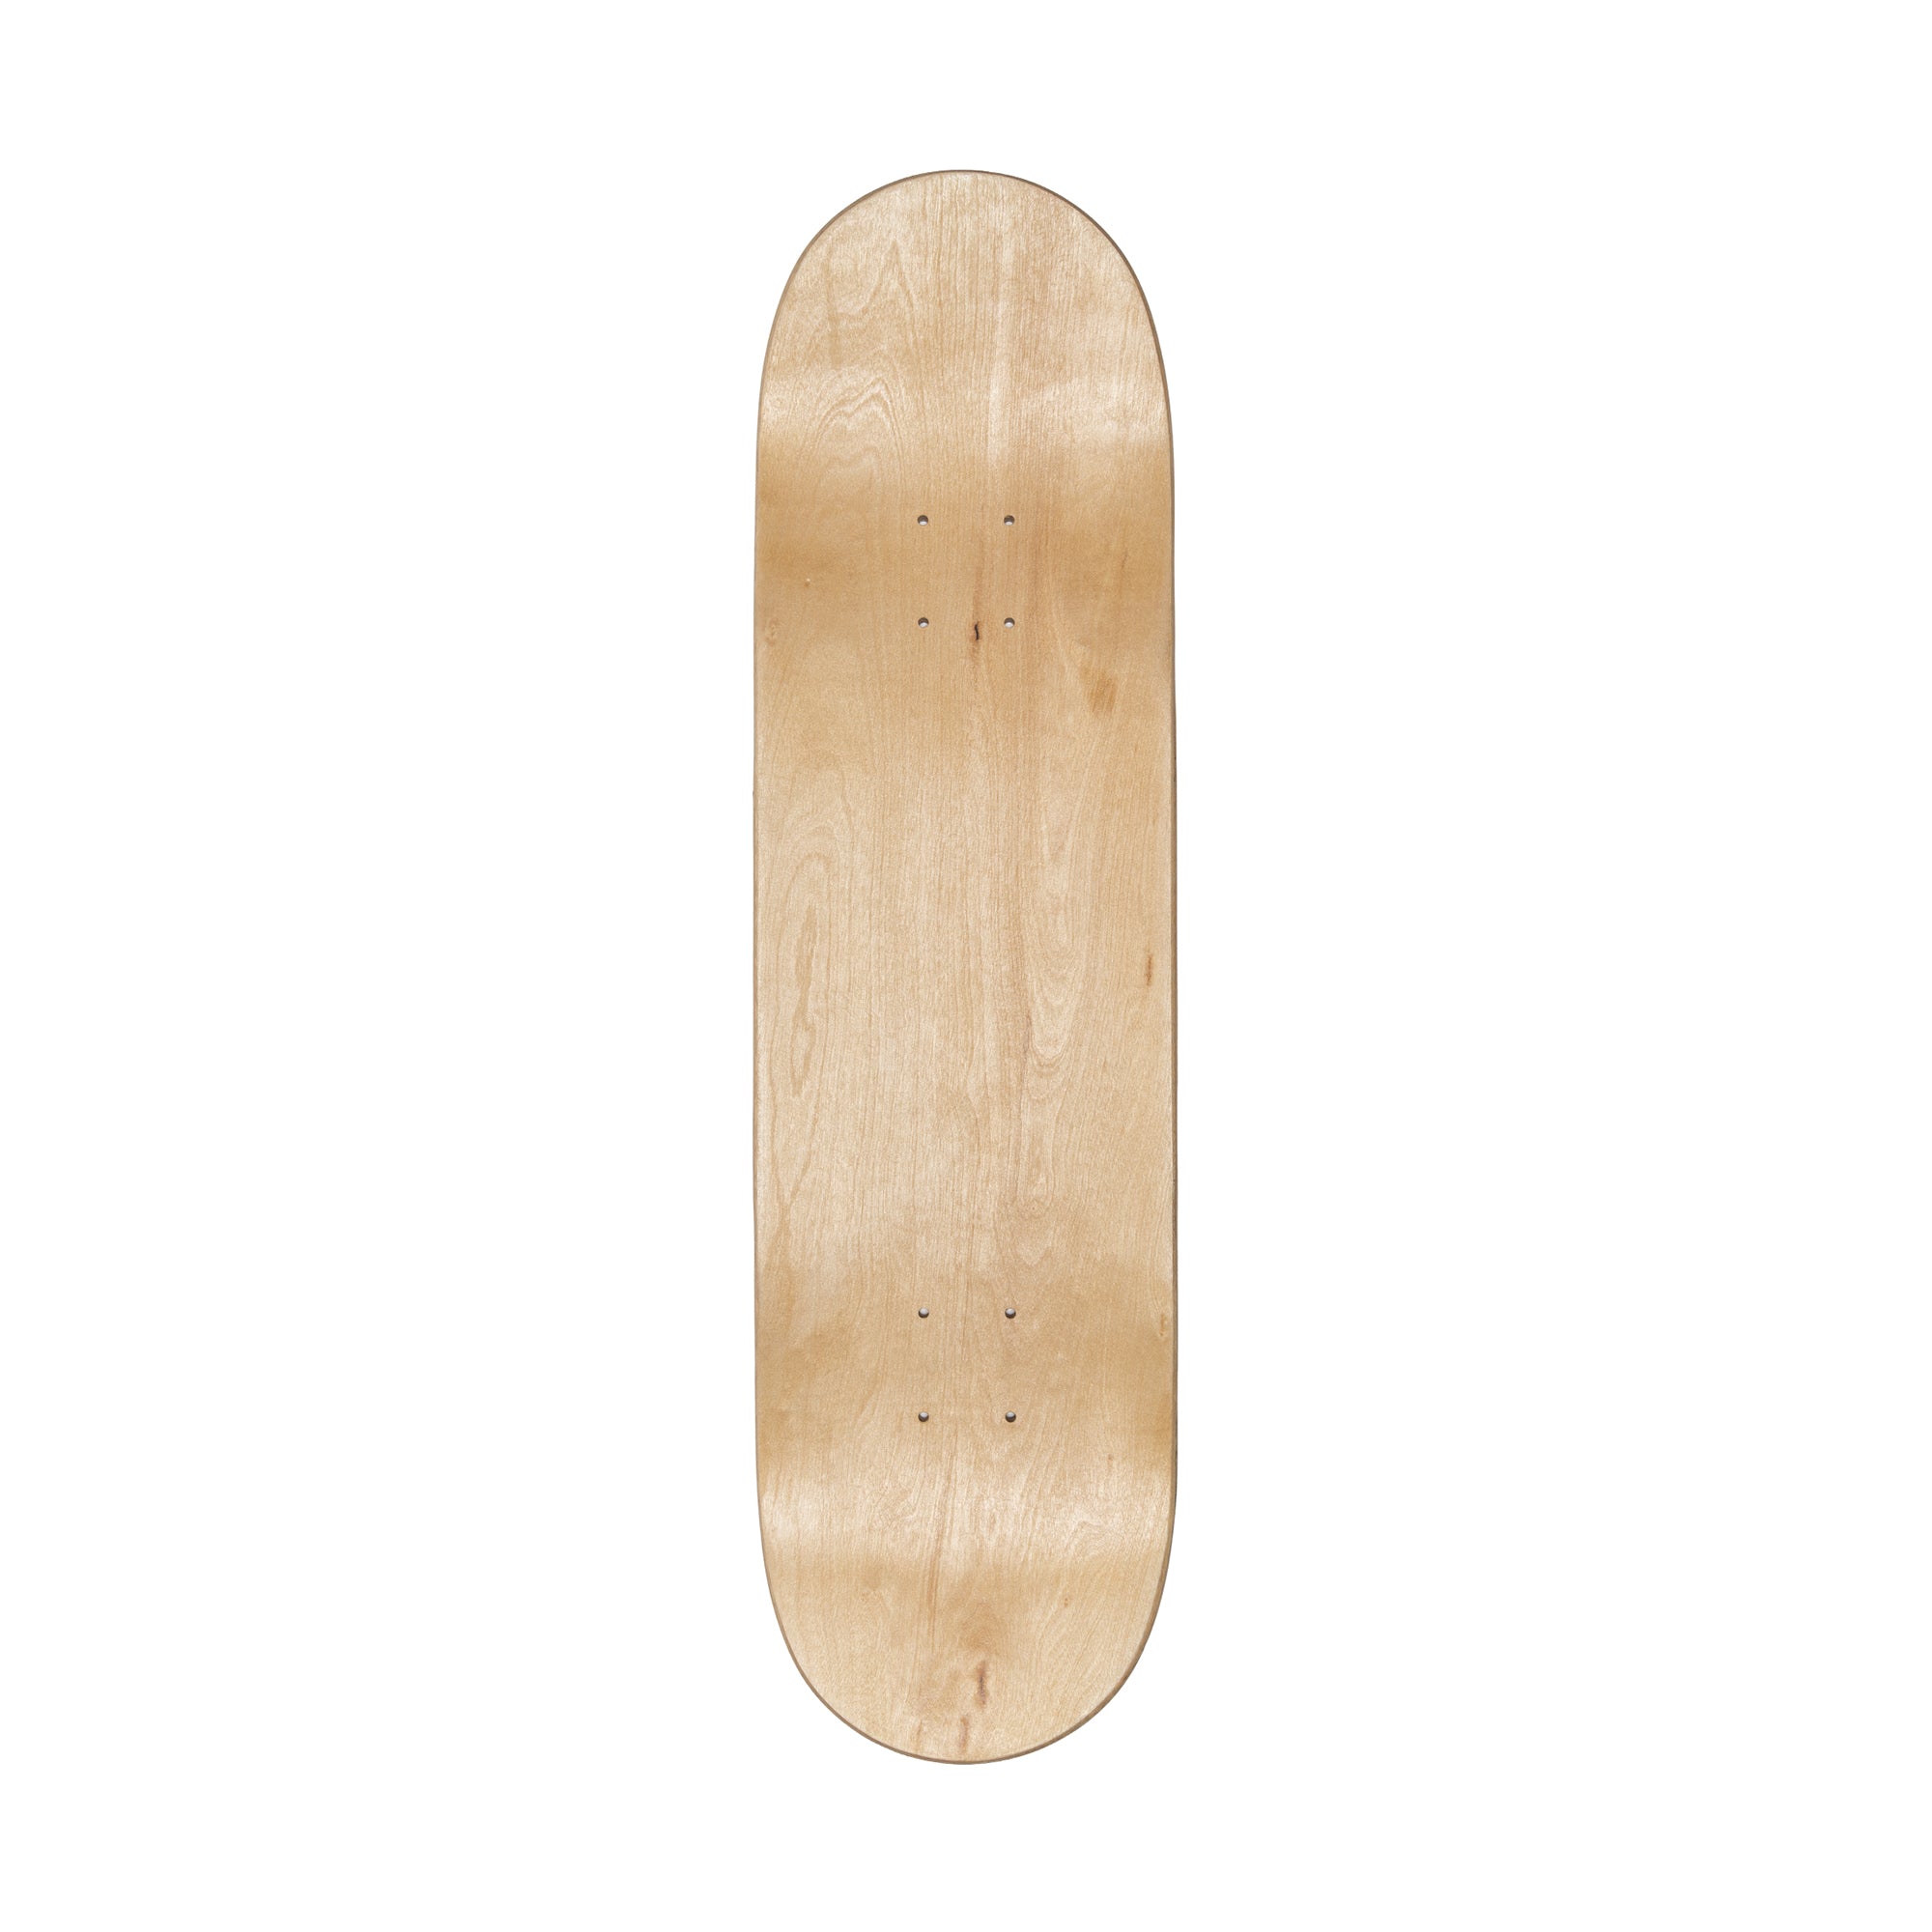 Plus Spell Out Logo Skateboard Deck Black-PLUS